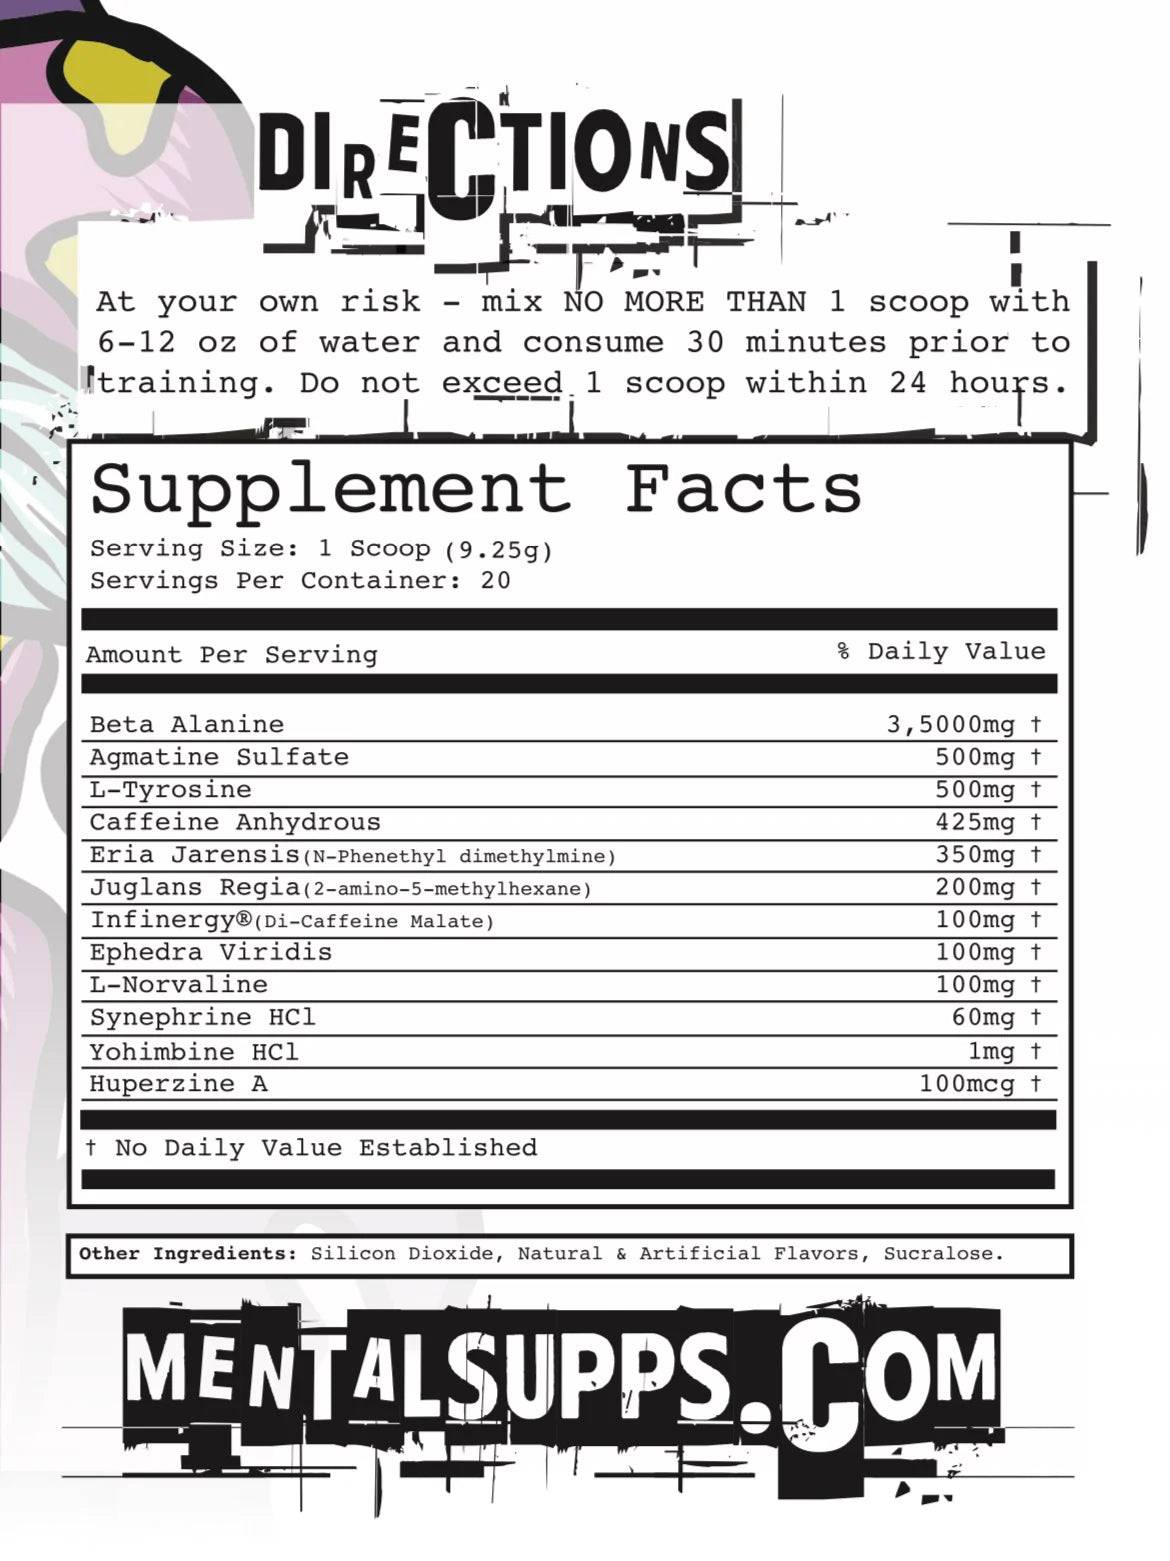 Mental Supps Mental Fuck Pre Workout - Bemoxie Supplements